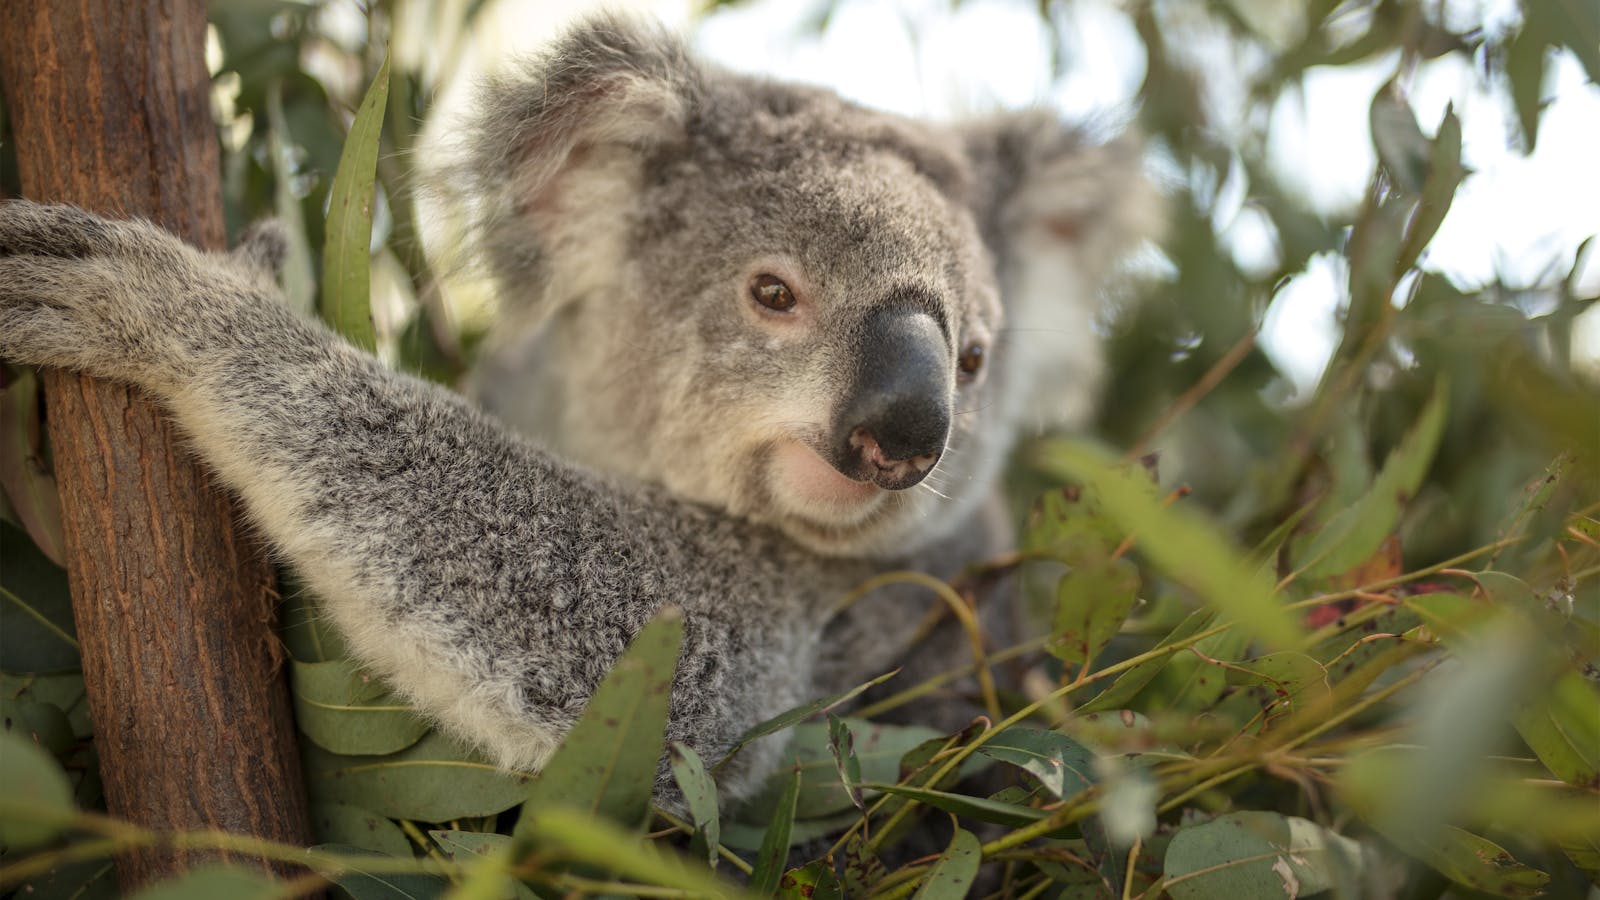 Meet a Koala at Paradise Country